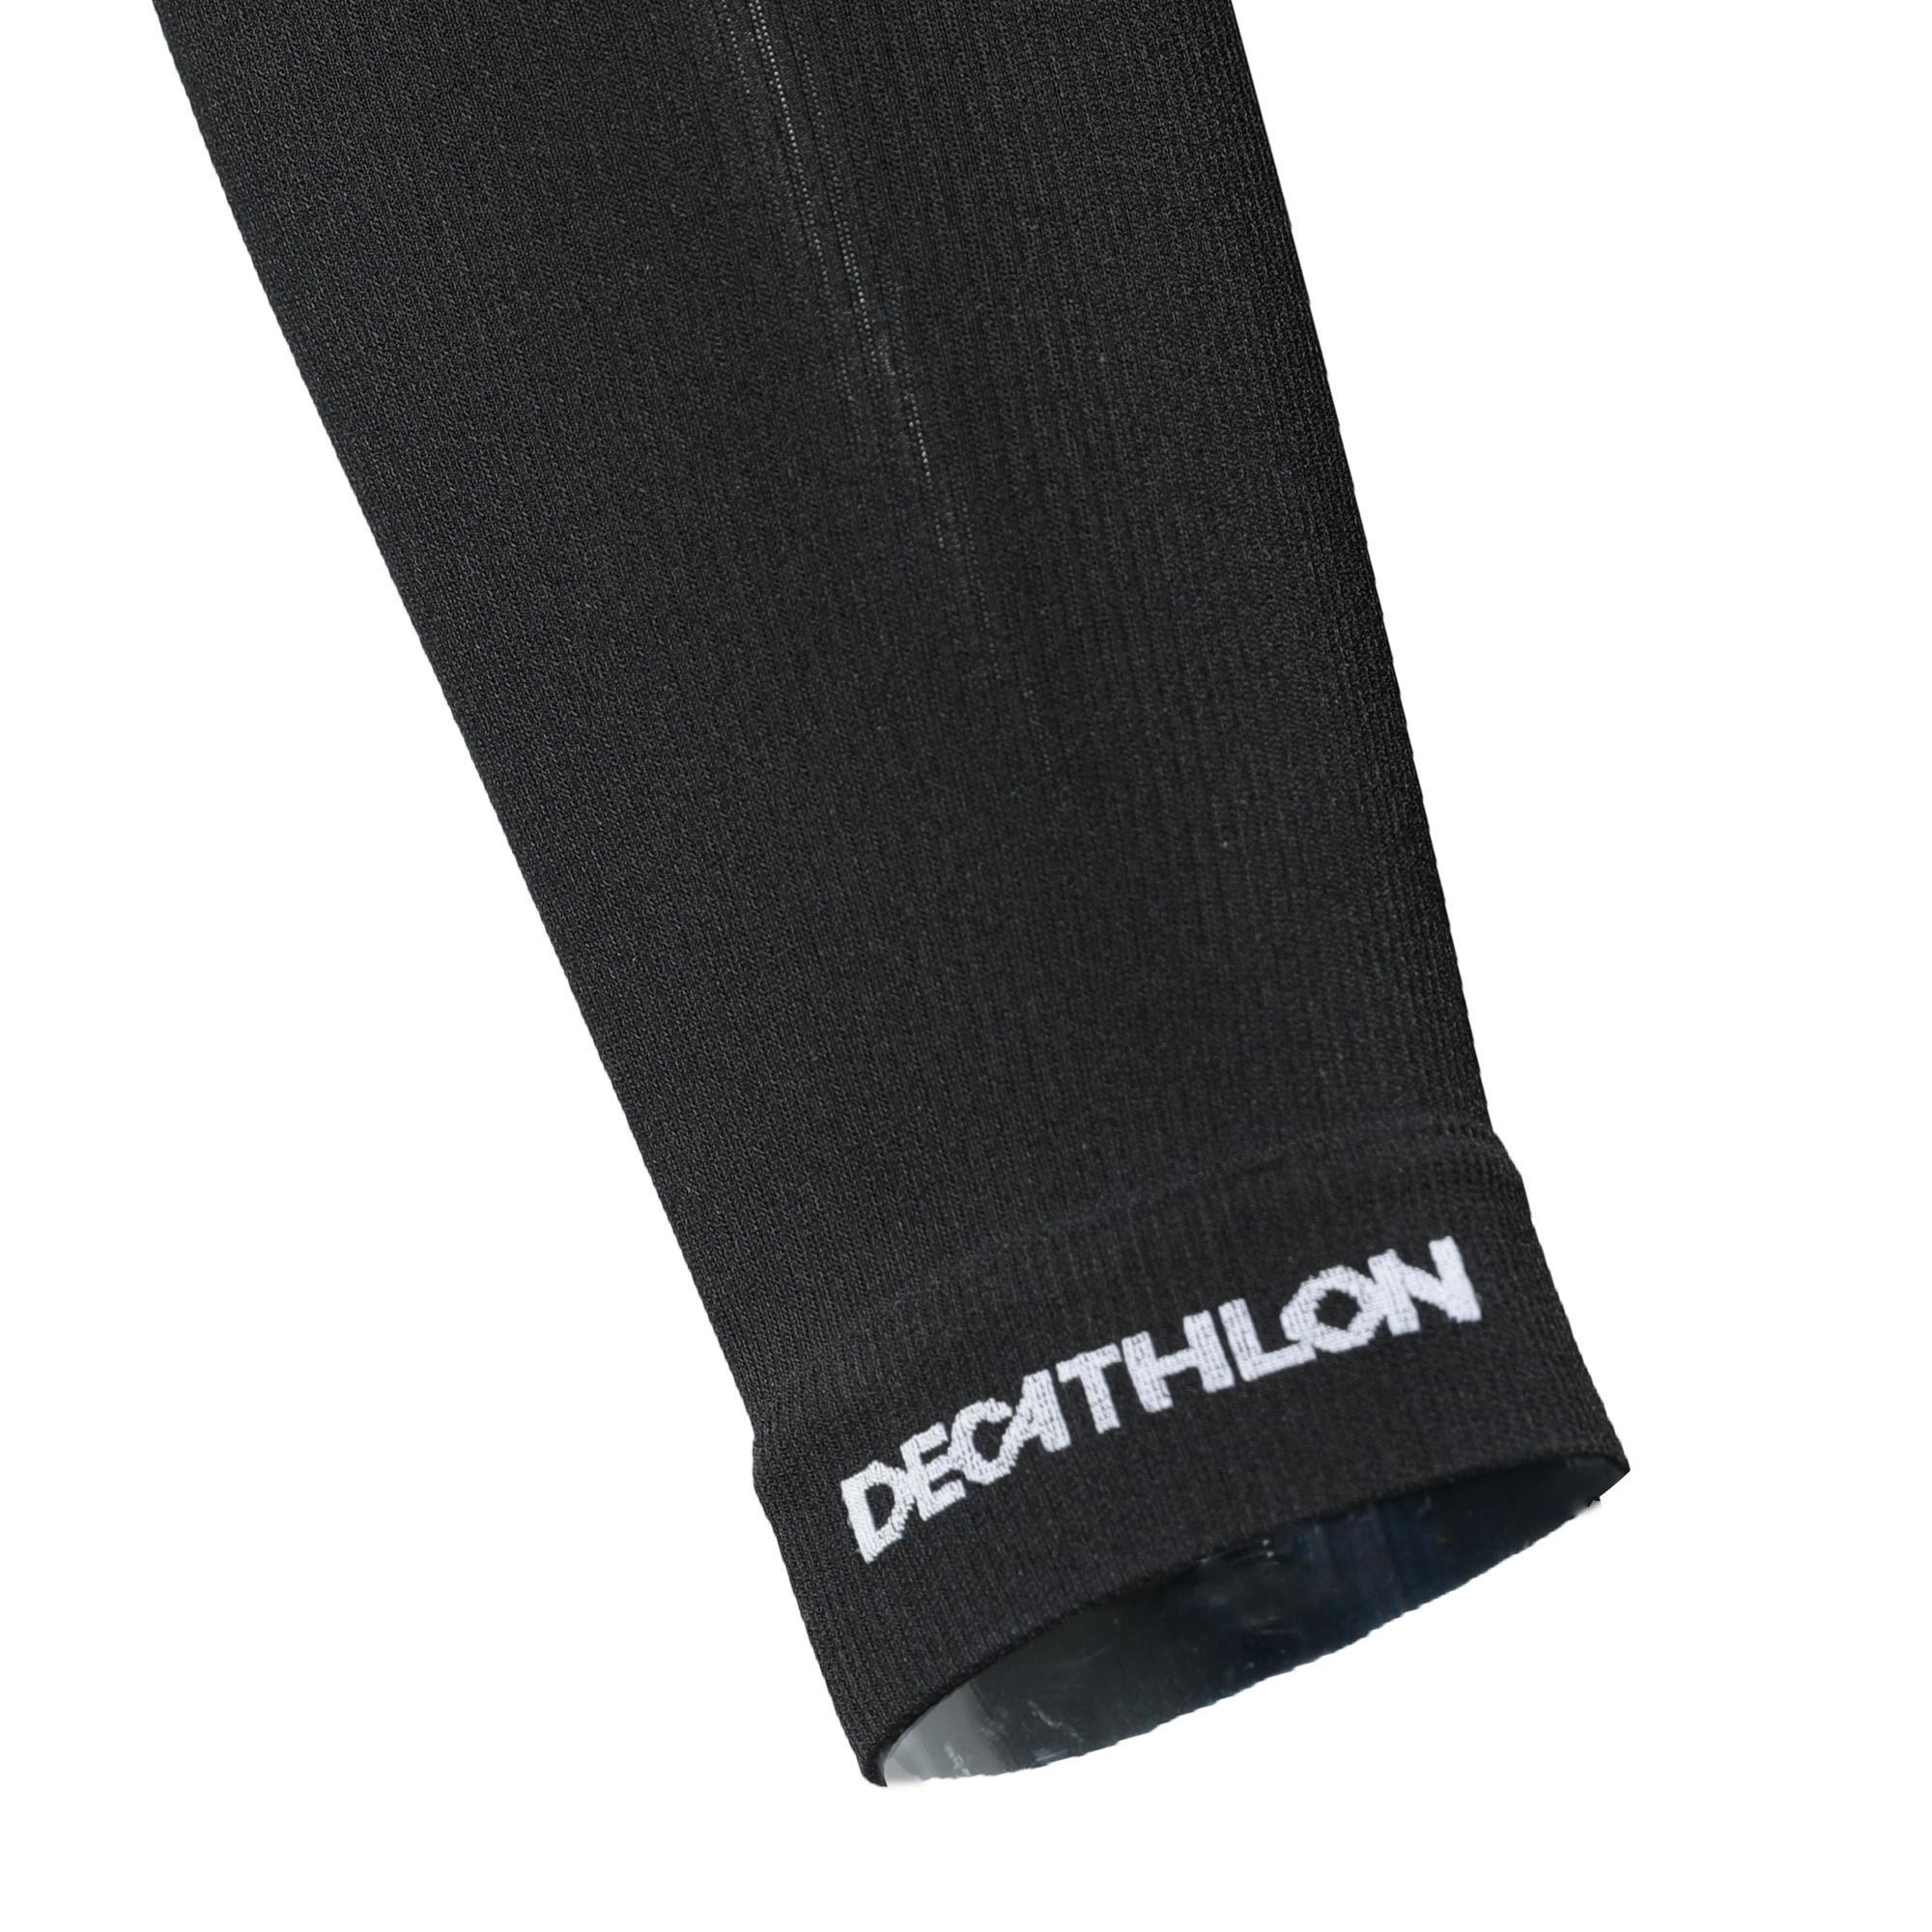 arm cover decathlon